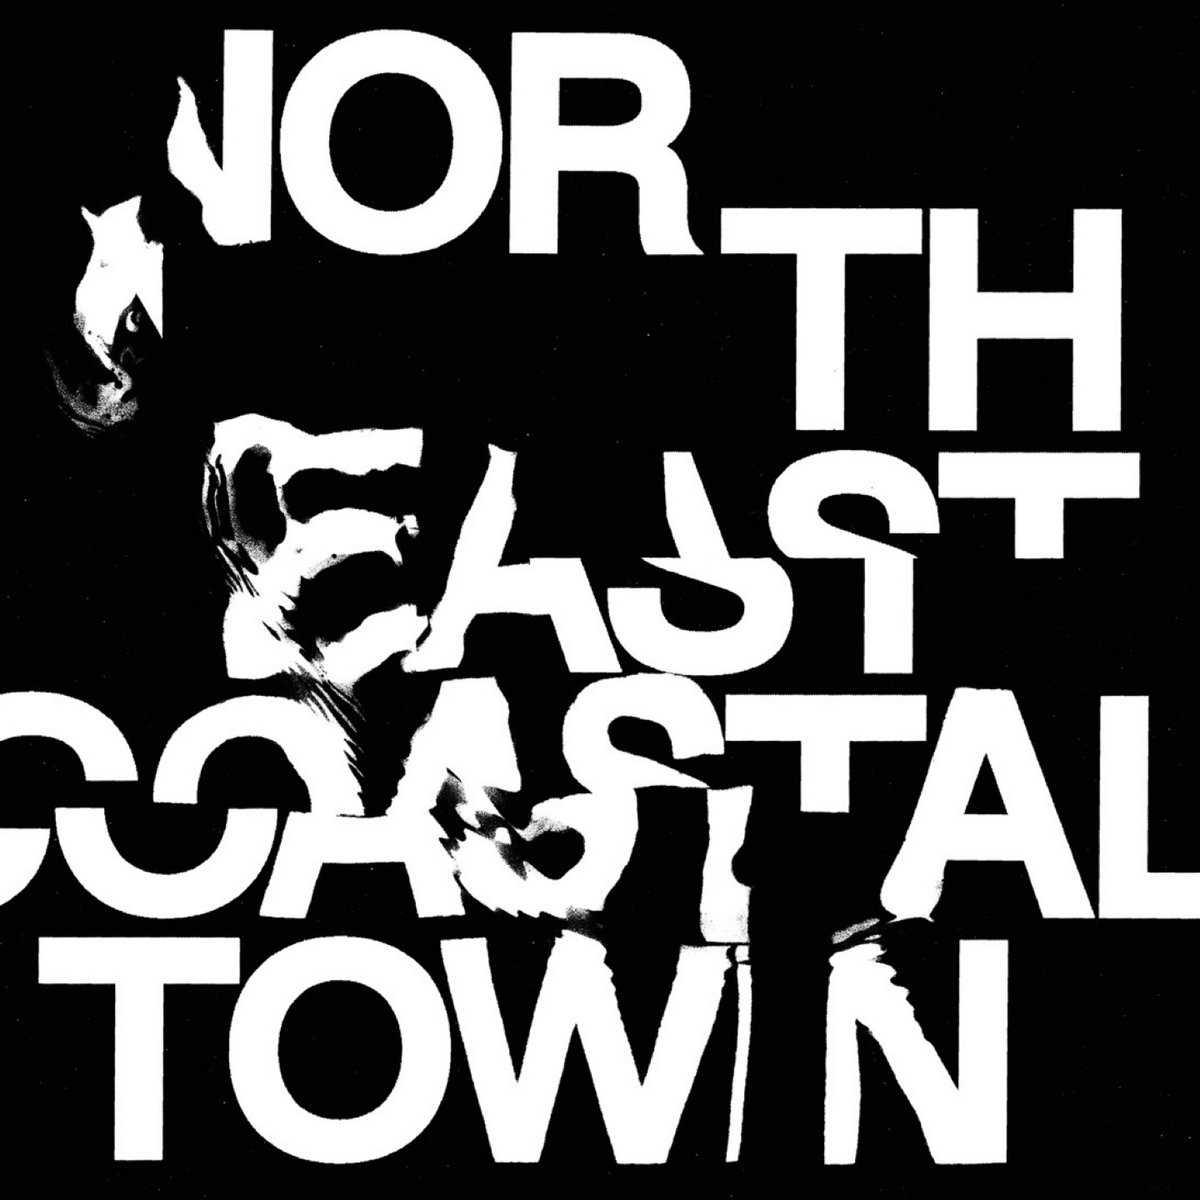 LIFE — North East Coastal Town